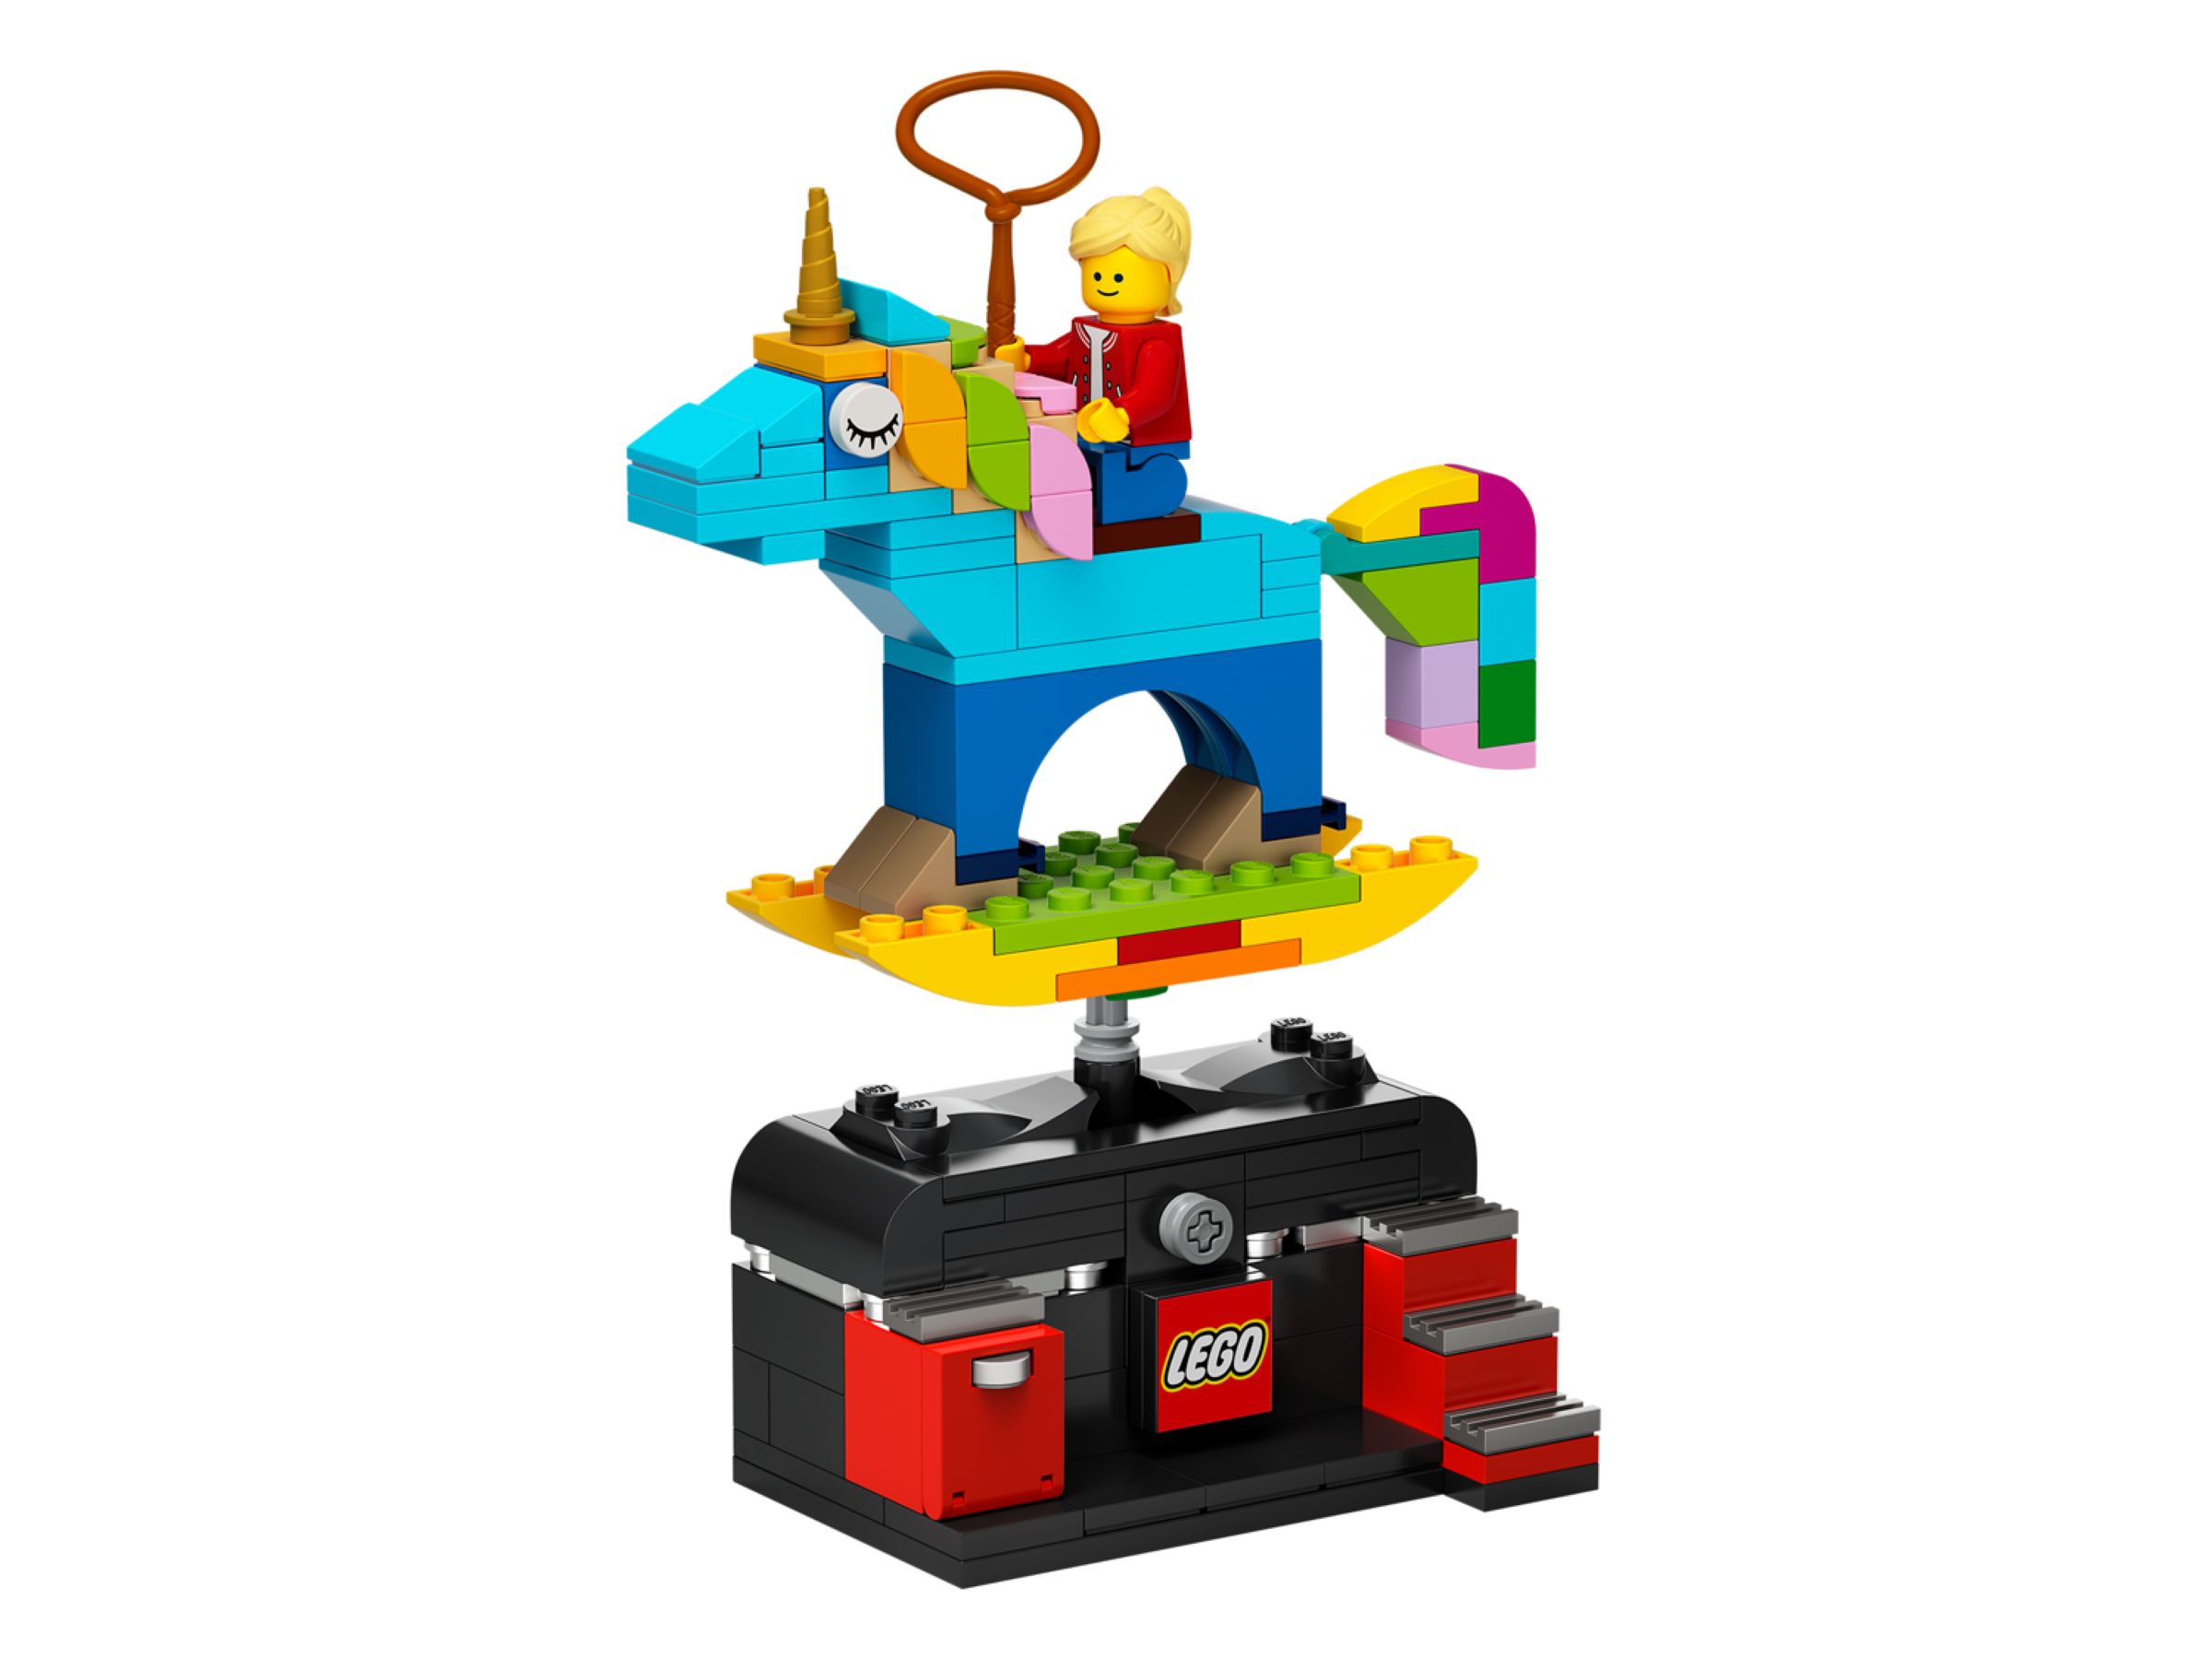 LEGO Promotional 5007489 LR 22 FANTASY ADVENTURE